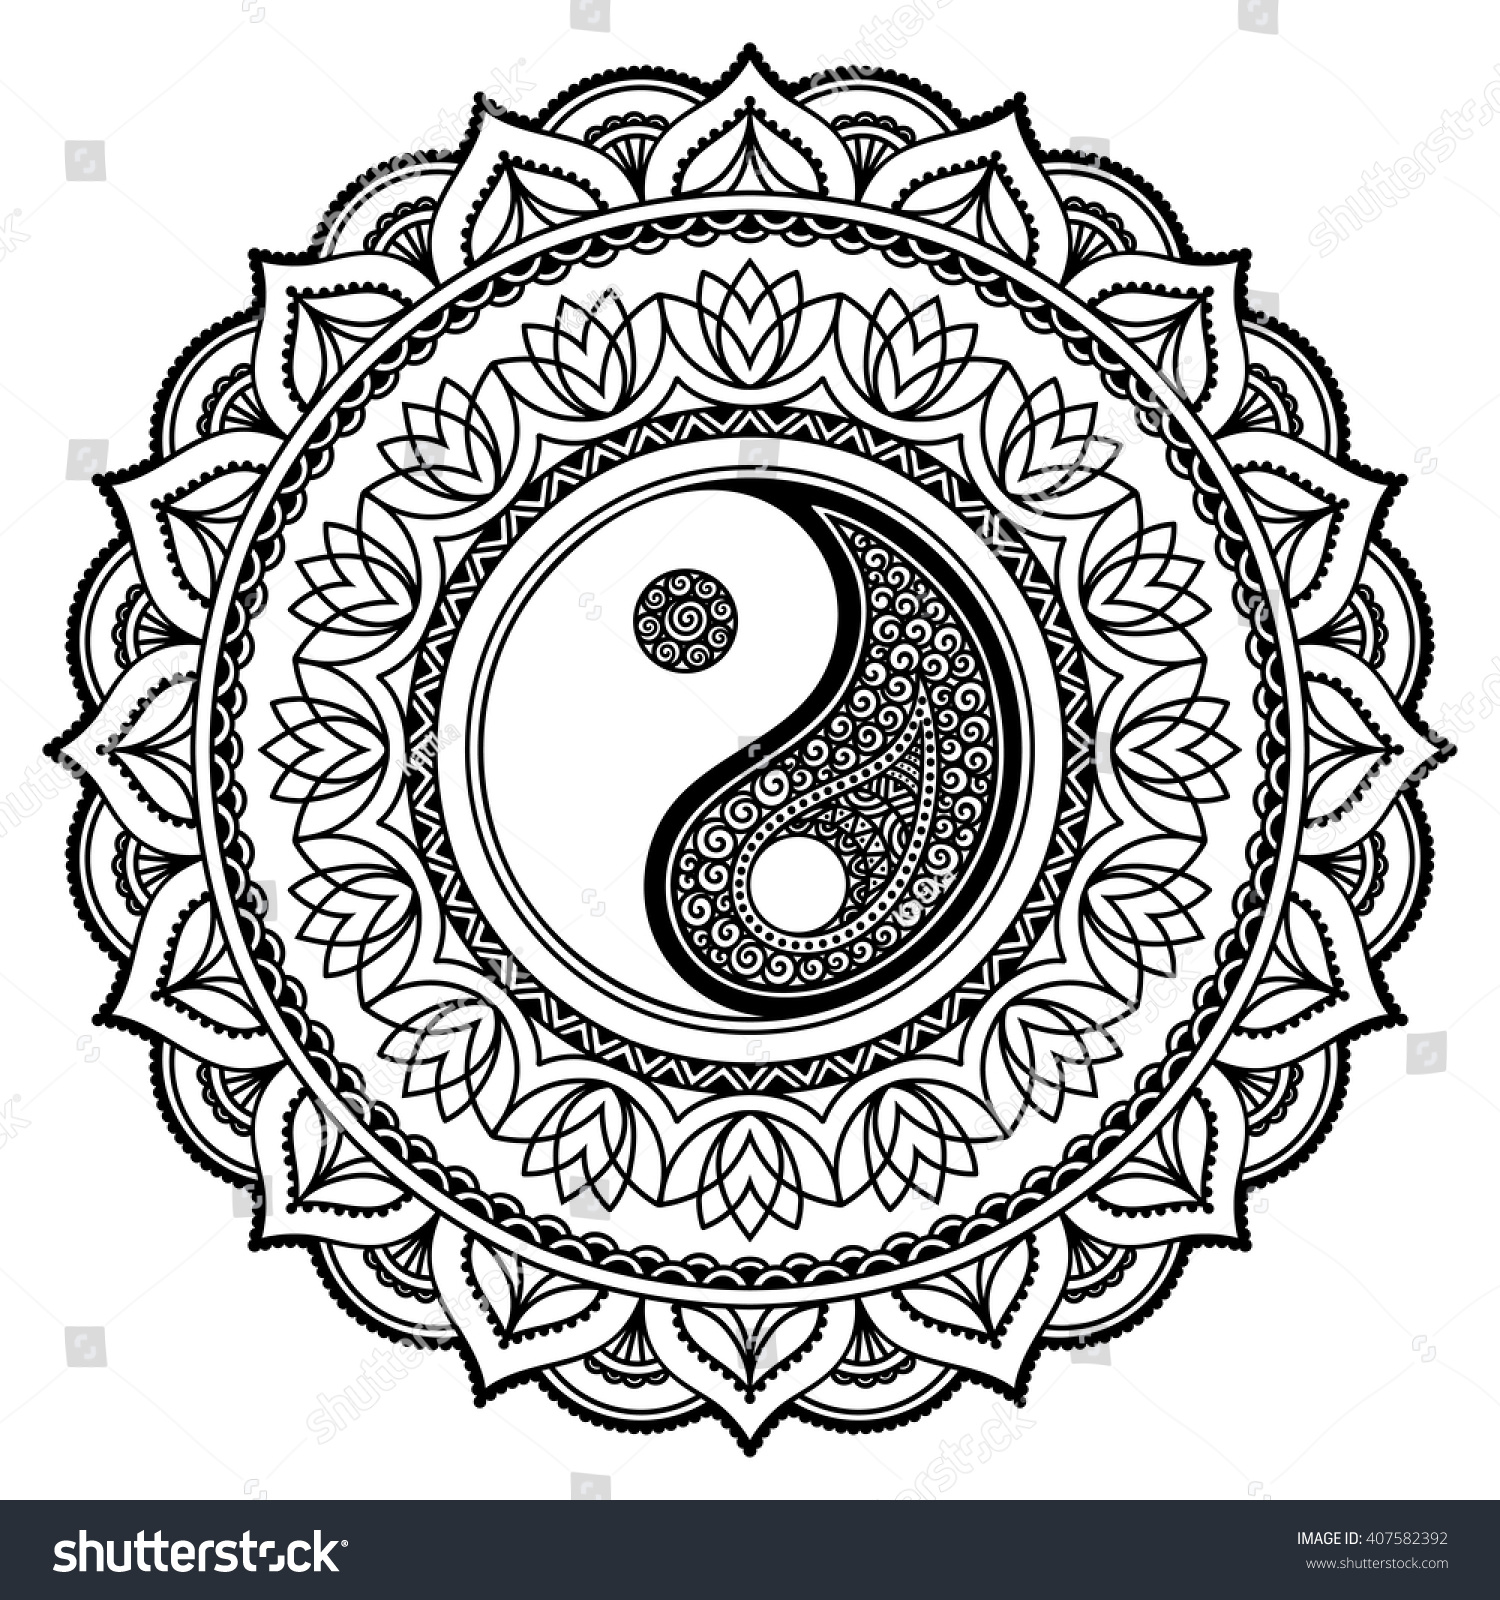 stock-vector-vector-henna-tatoo-mandala-yin-yang-decorative-symbol-mehndi-style-407582392.jpg